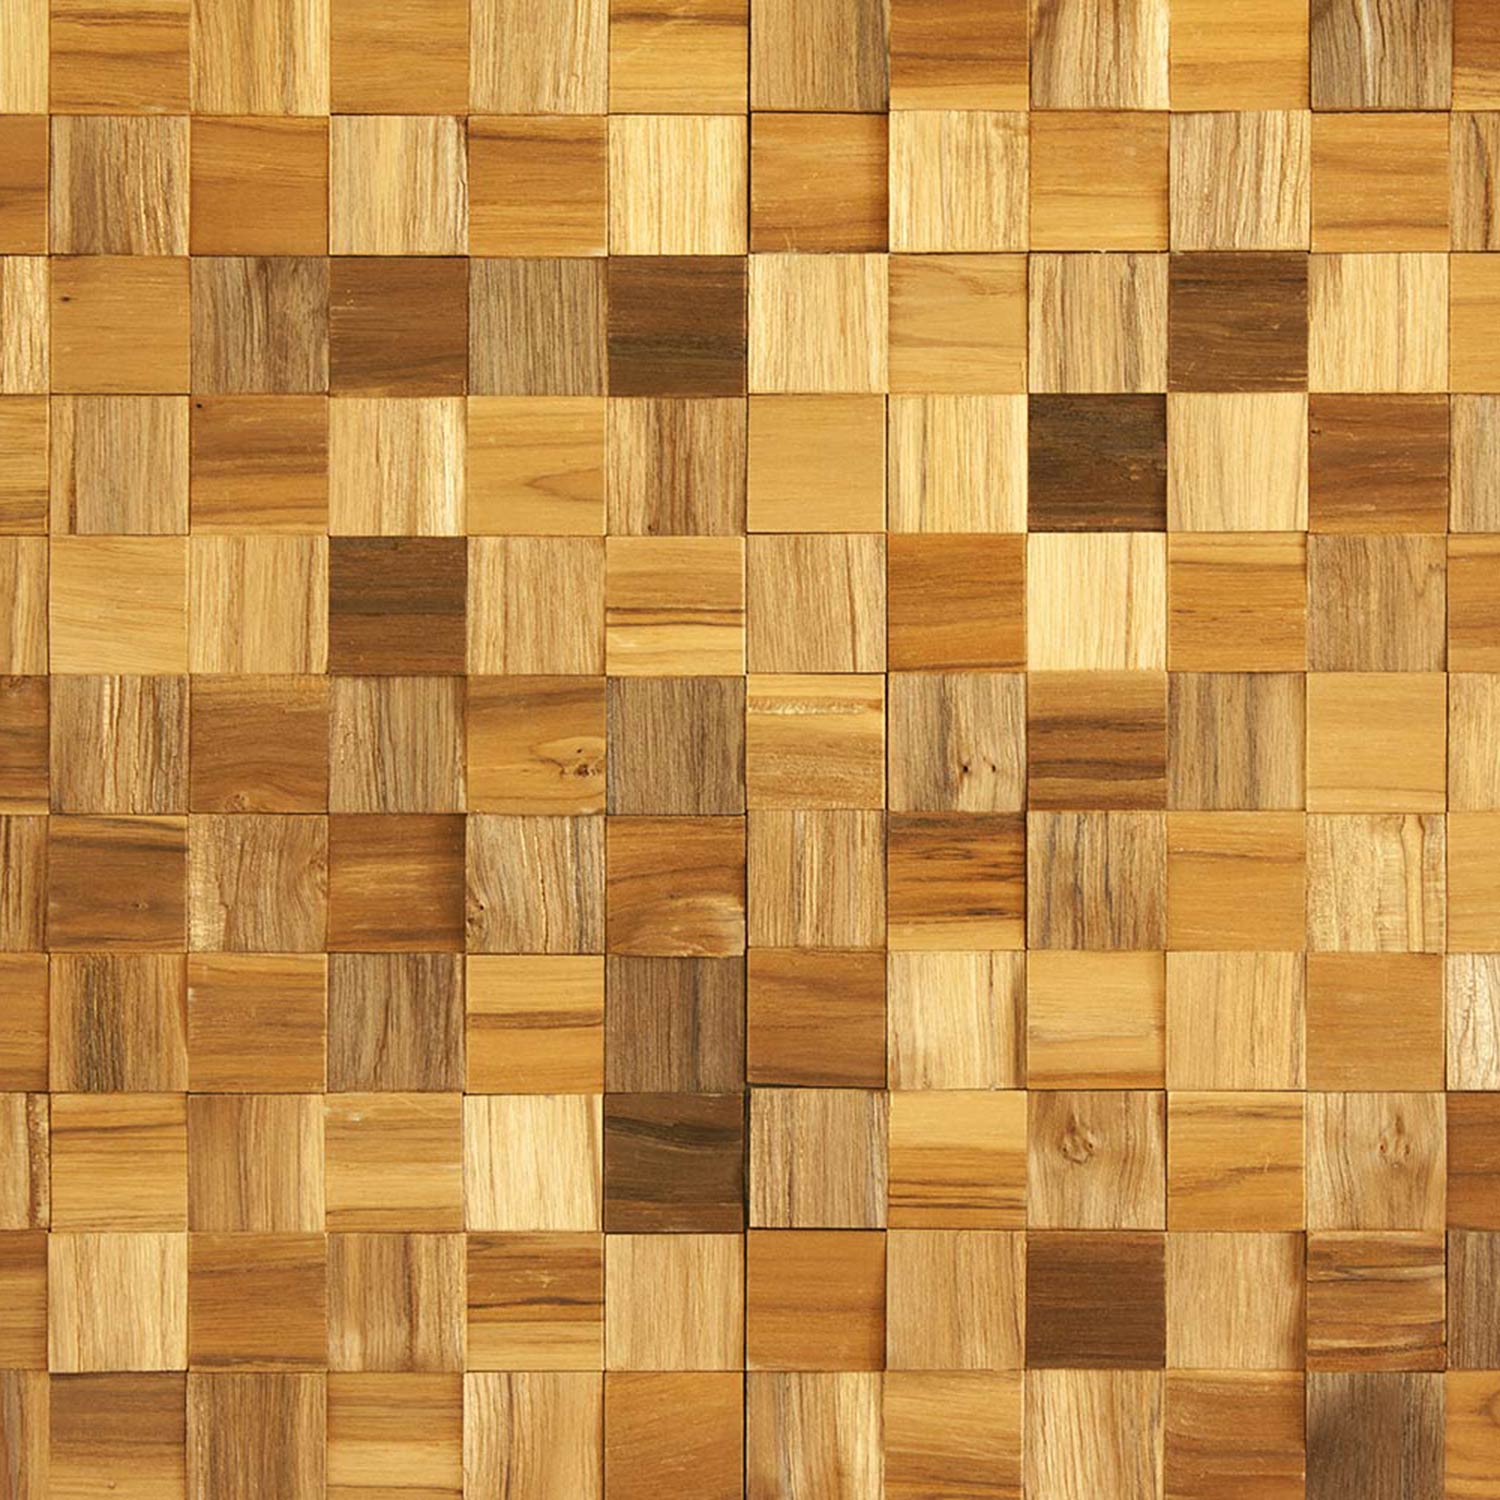 Wood Blocks - Wooden Blocks For Walls - HD Wallpaper 